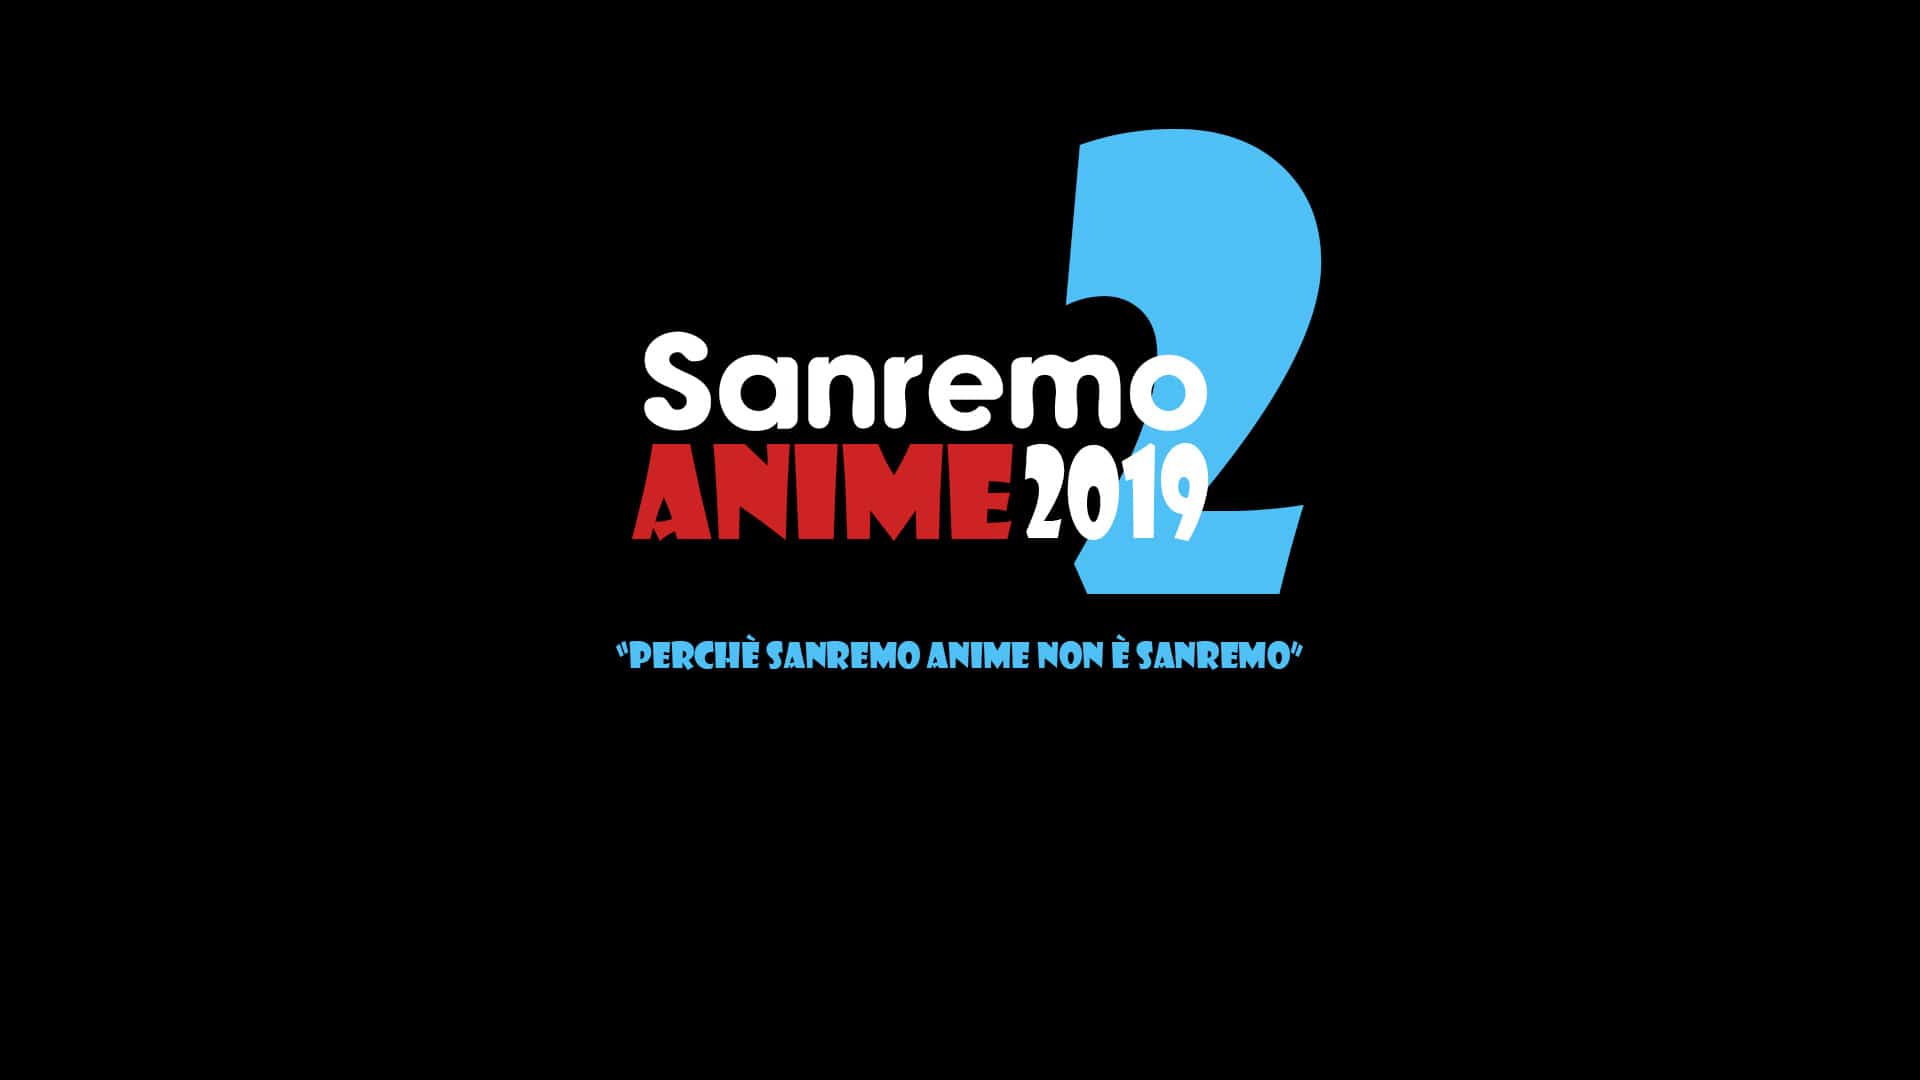 Sanremo Anime 2